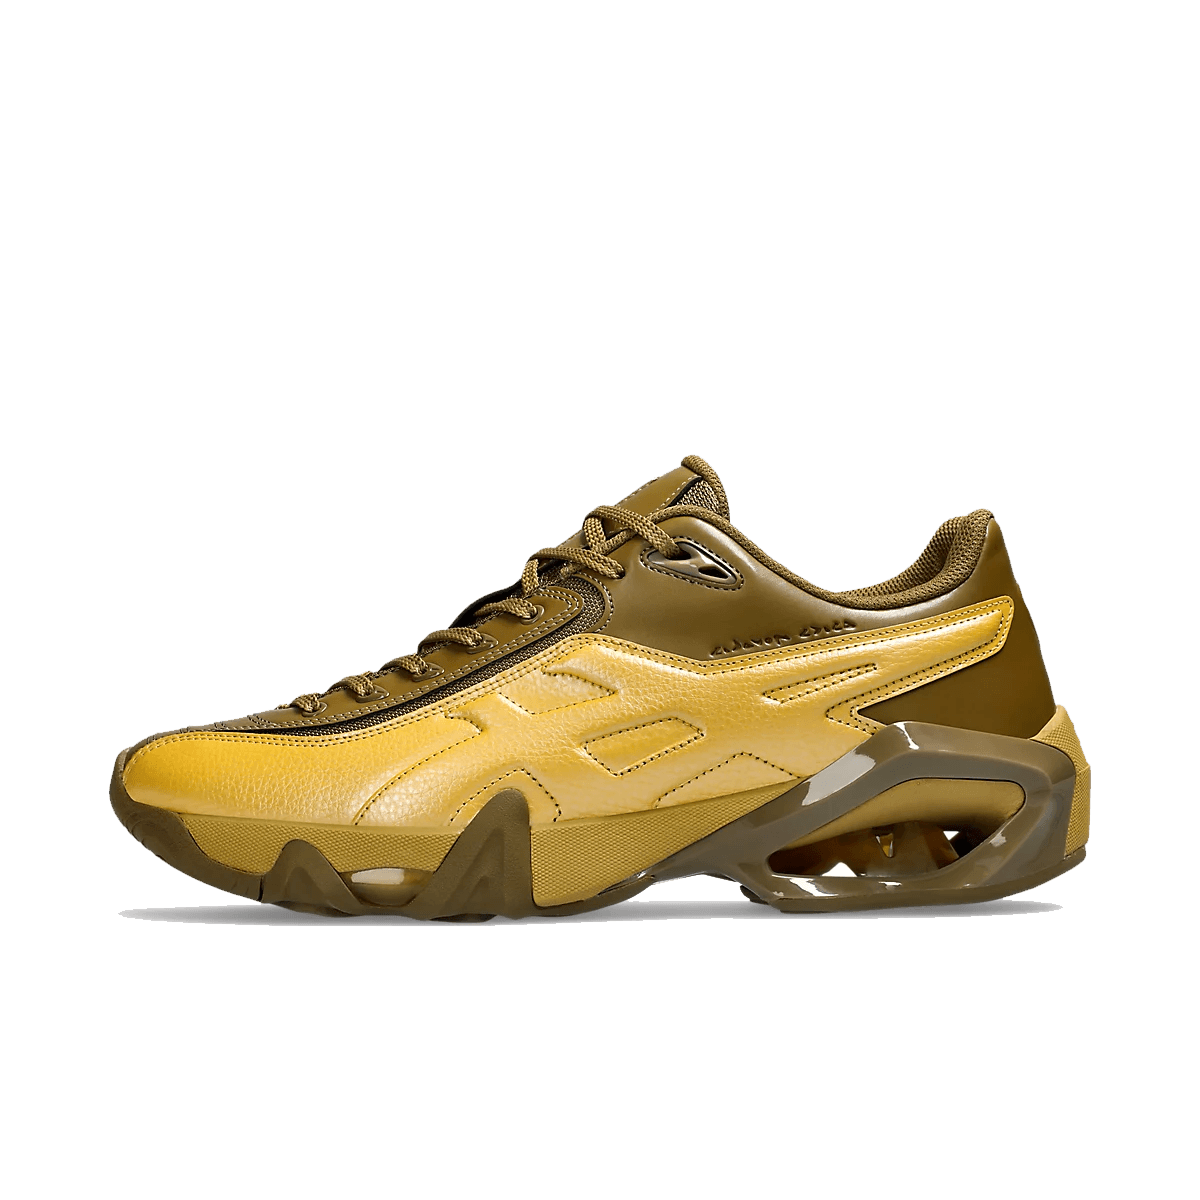 Women's Nike Air Max 97 OG QS 'Metallic Gold' Release Date. Nike SNKRS